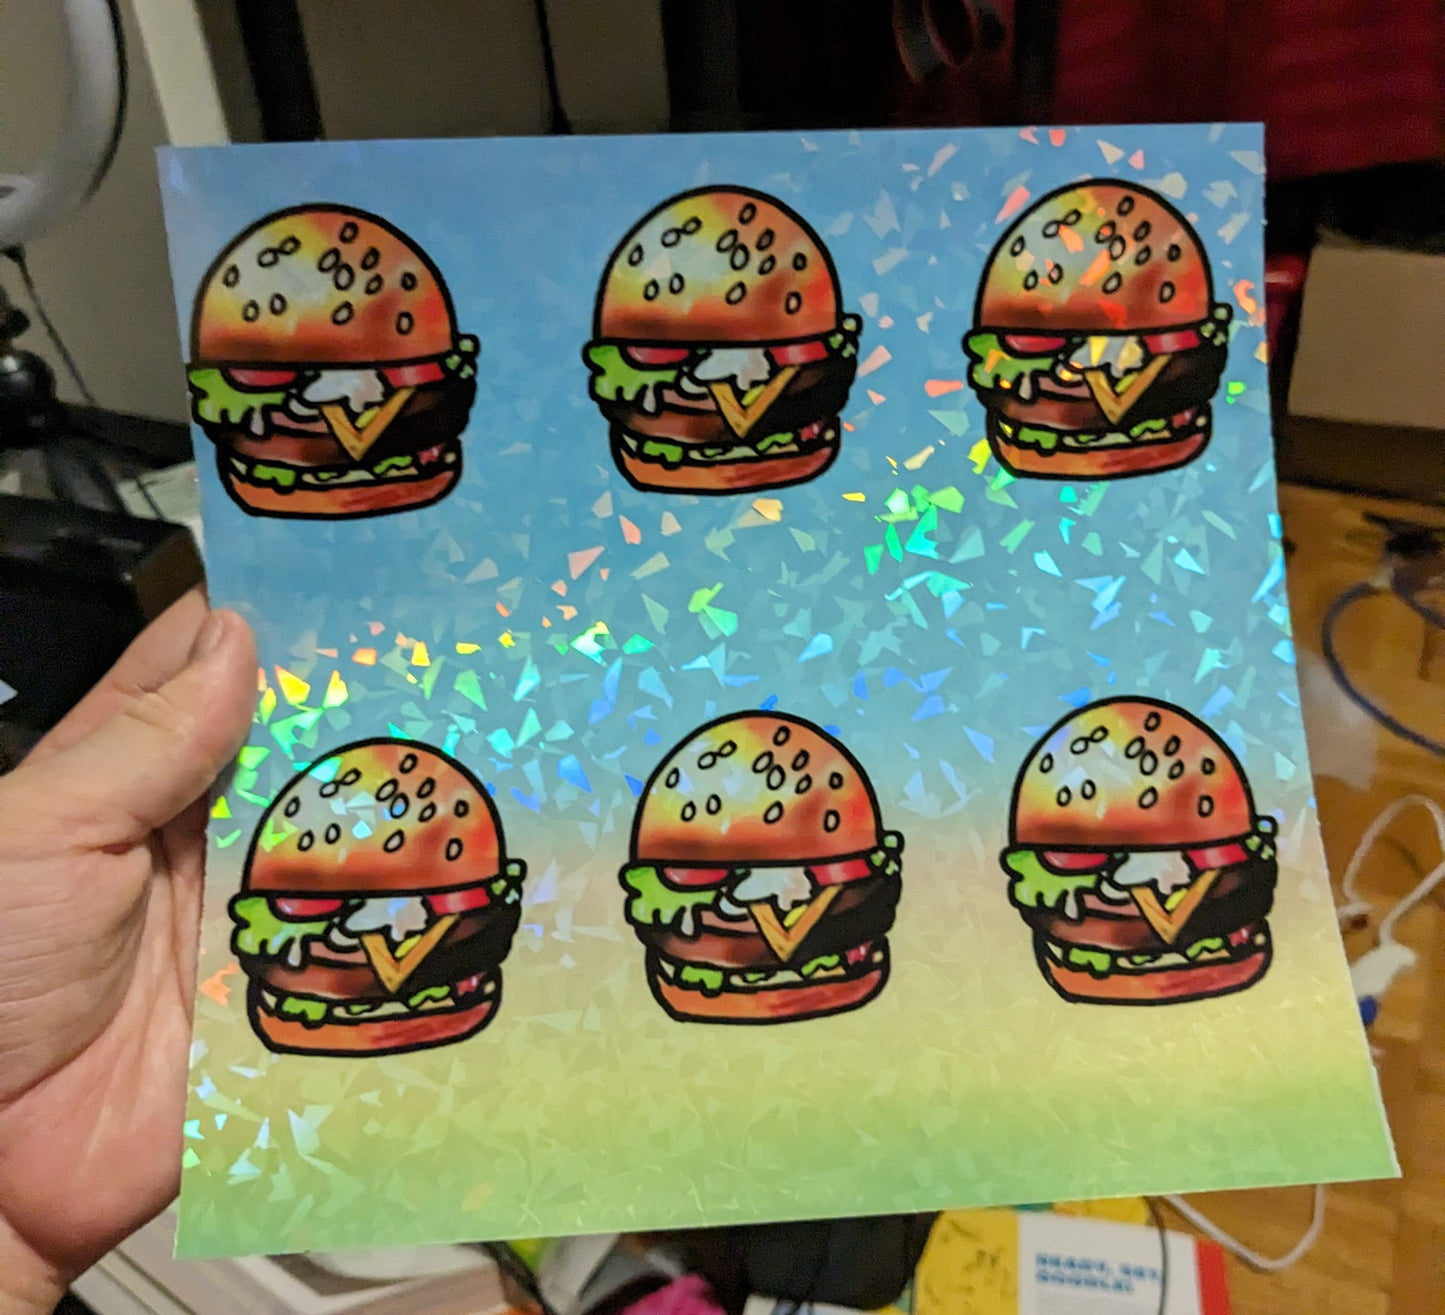 Holographic cartoon burger prints 8x8